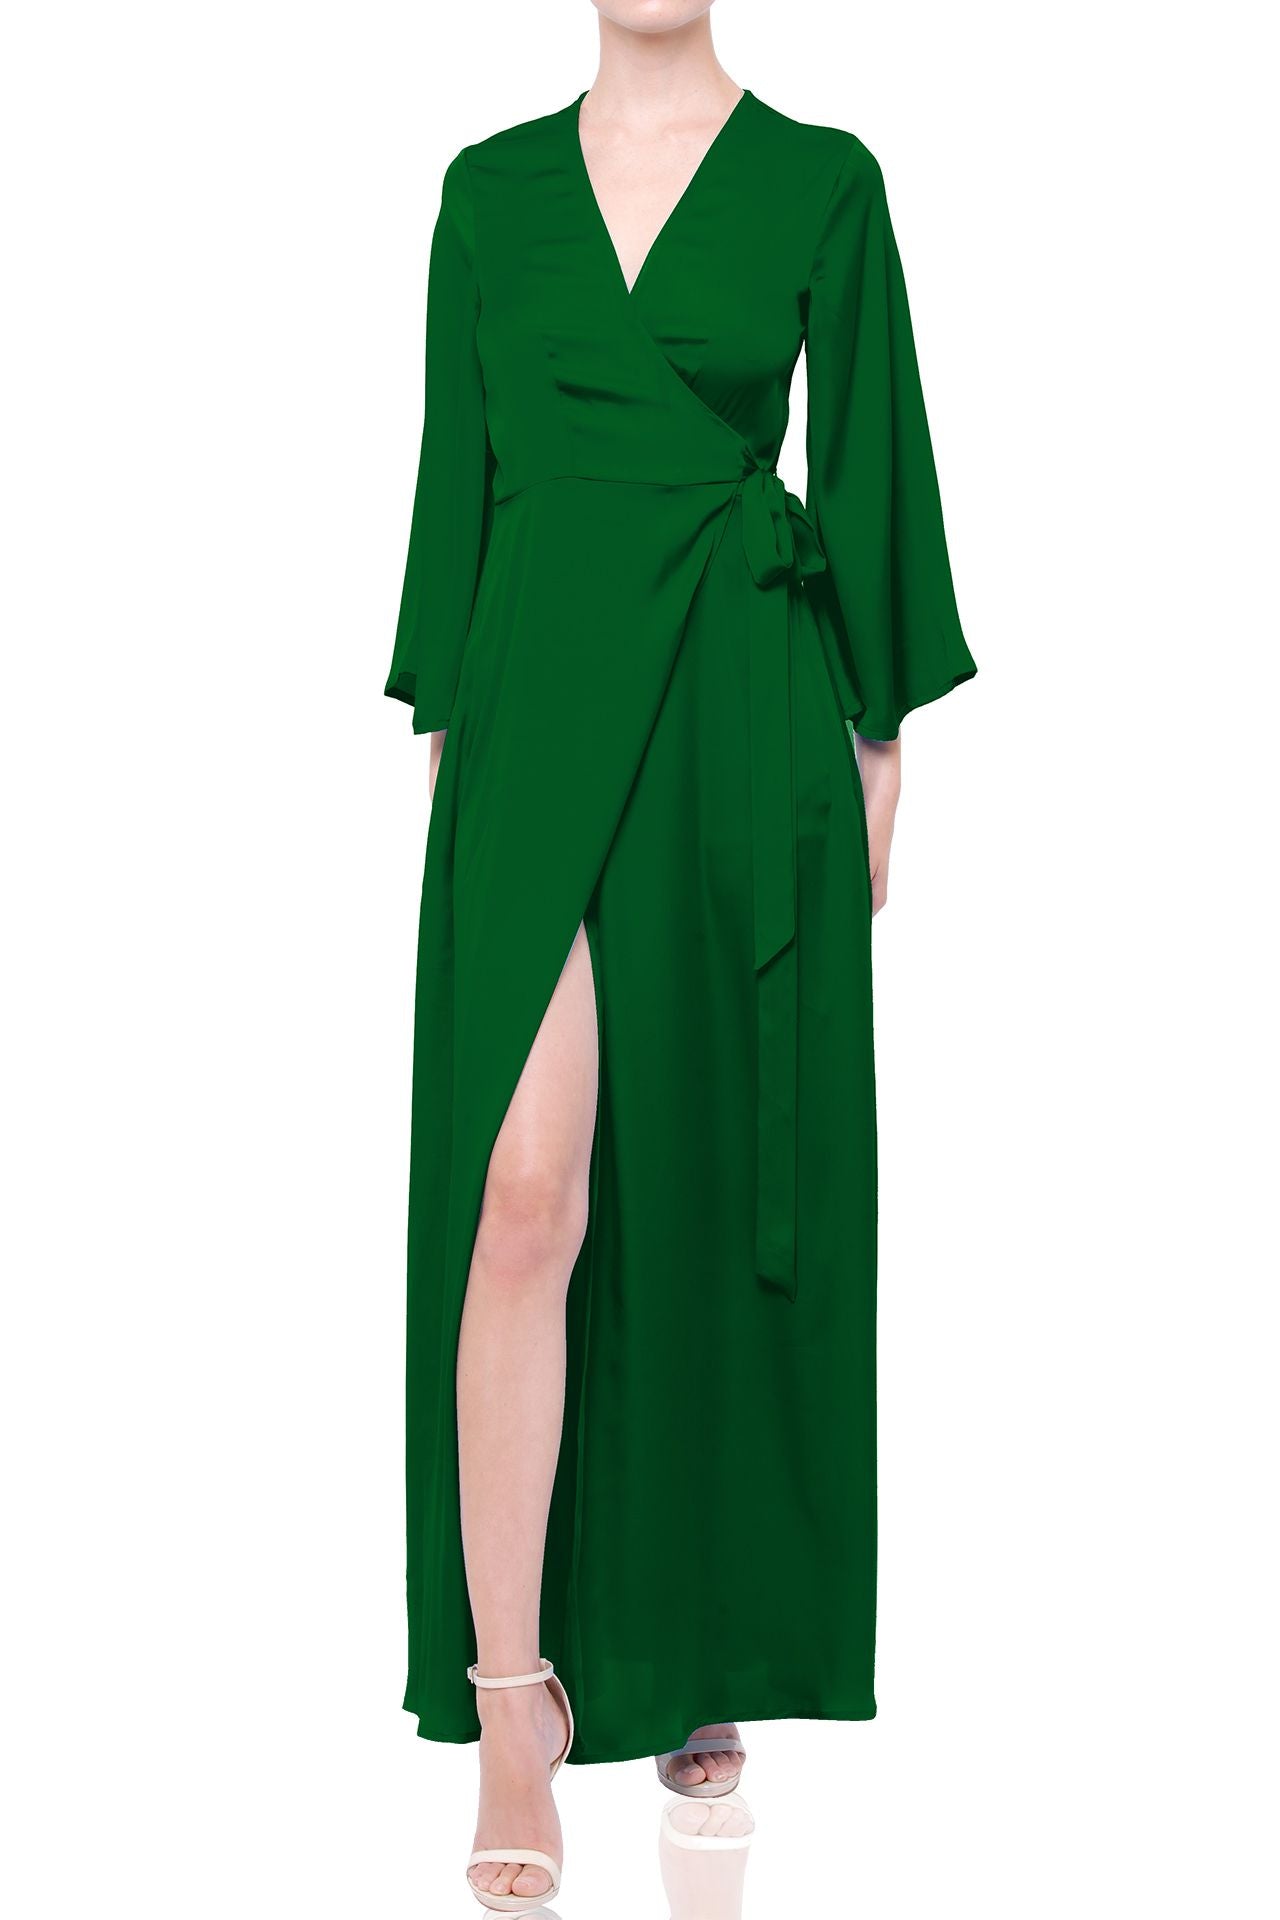 "wrap dress dark green" "wrap dress emerald green" "Kyle X Shahida" "long sleeve wrap maxi dress"